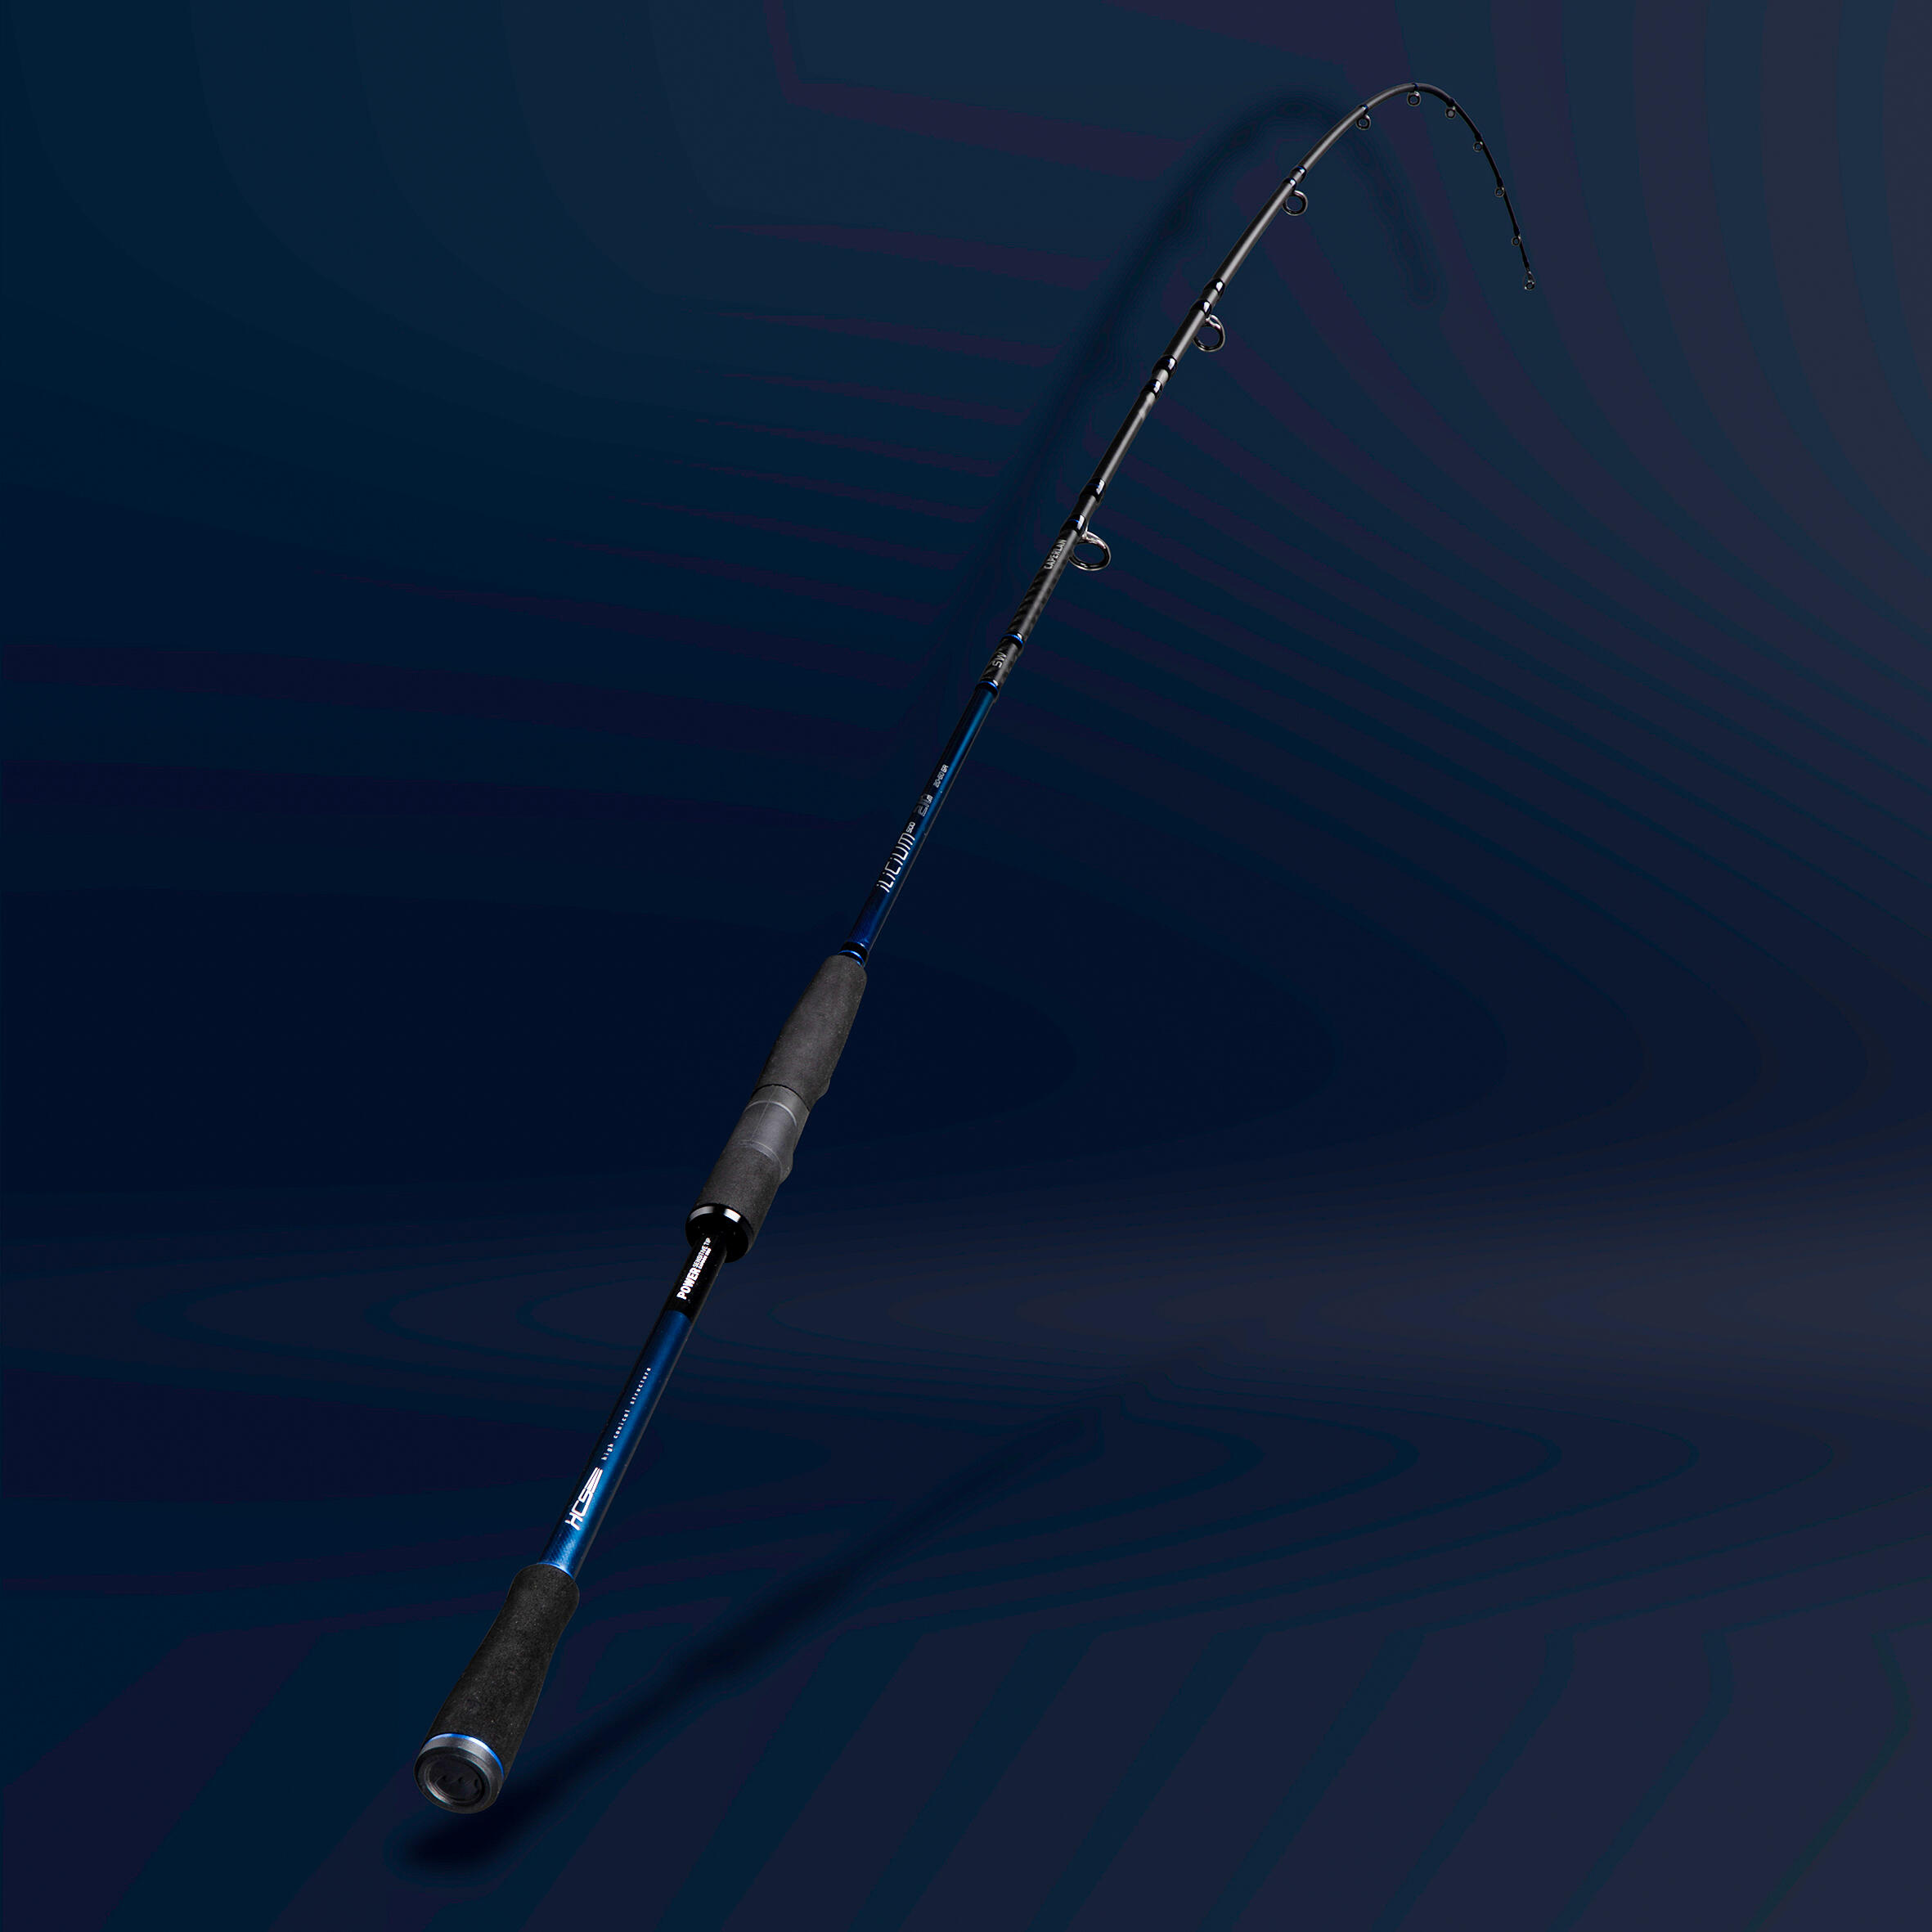 Sea Lure Fishing Rod ILCIUM-500 210 POWER 20-60 g 8/8